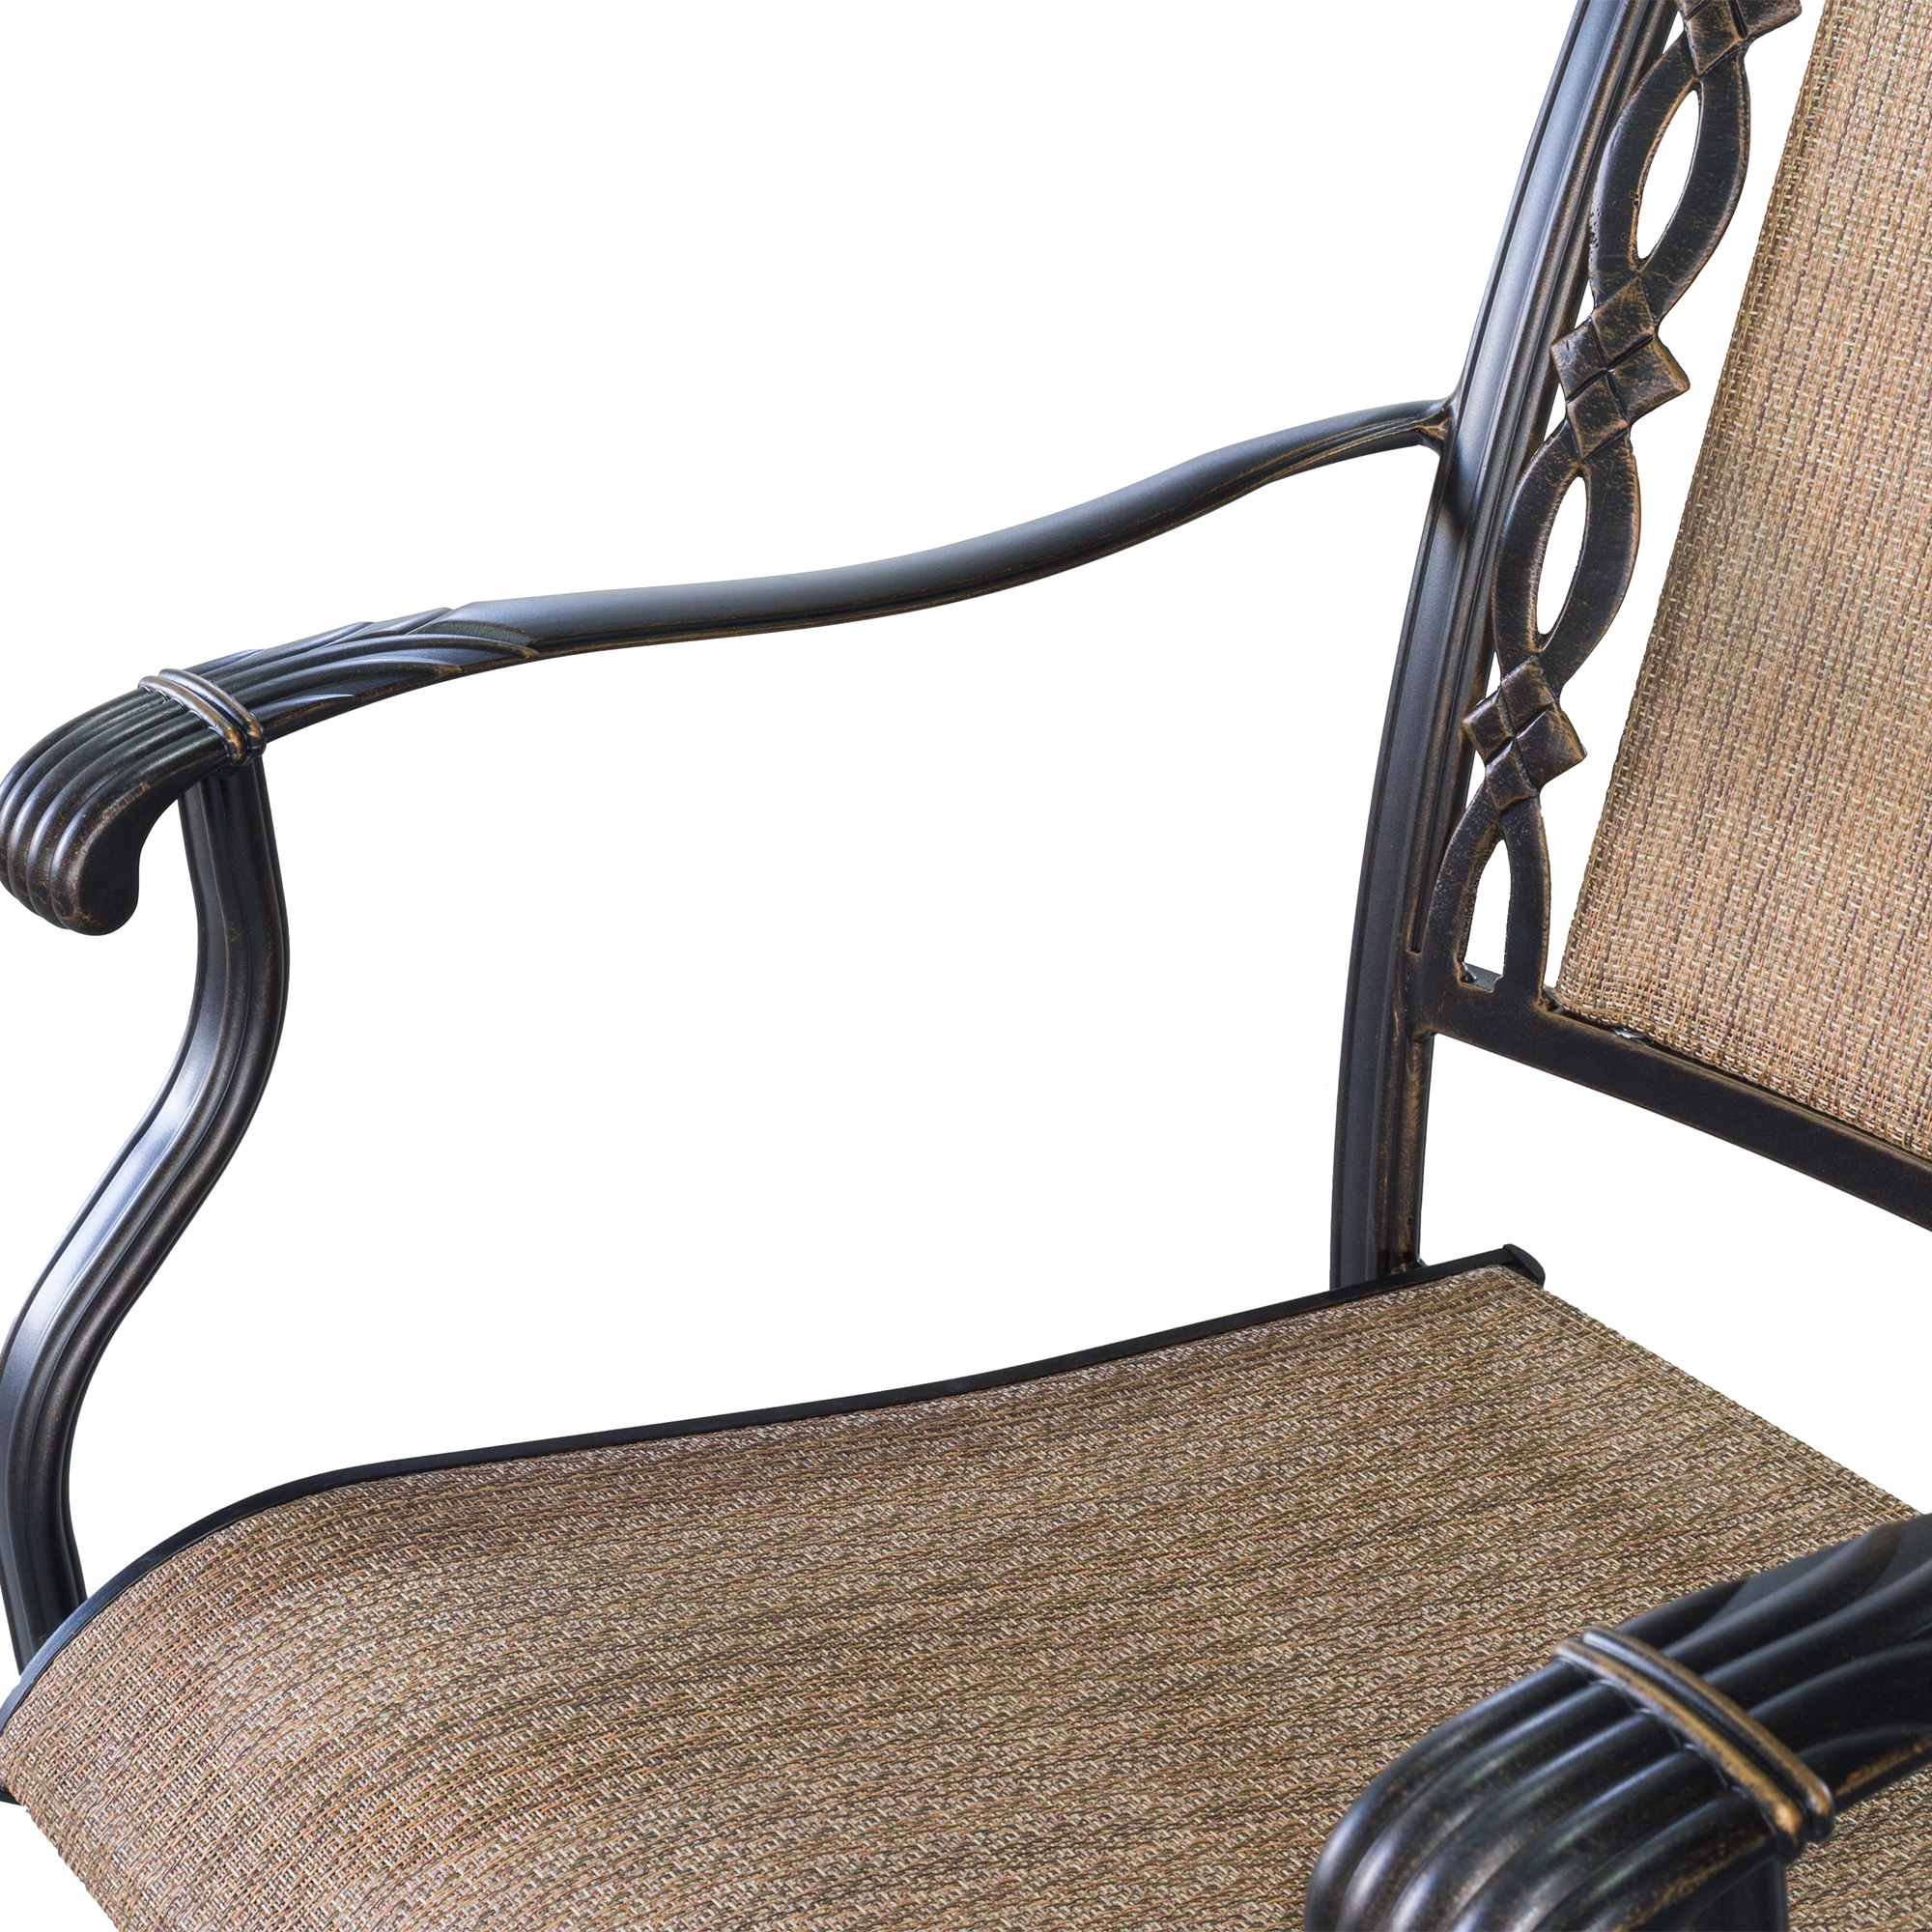 Mondawe 5-Piece Mondawe Outdoor Textilene Aluminum Swivel Chair Dining Set and Round Ceramic Table-Mondawe